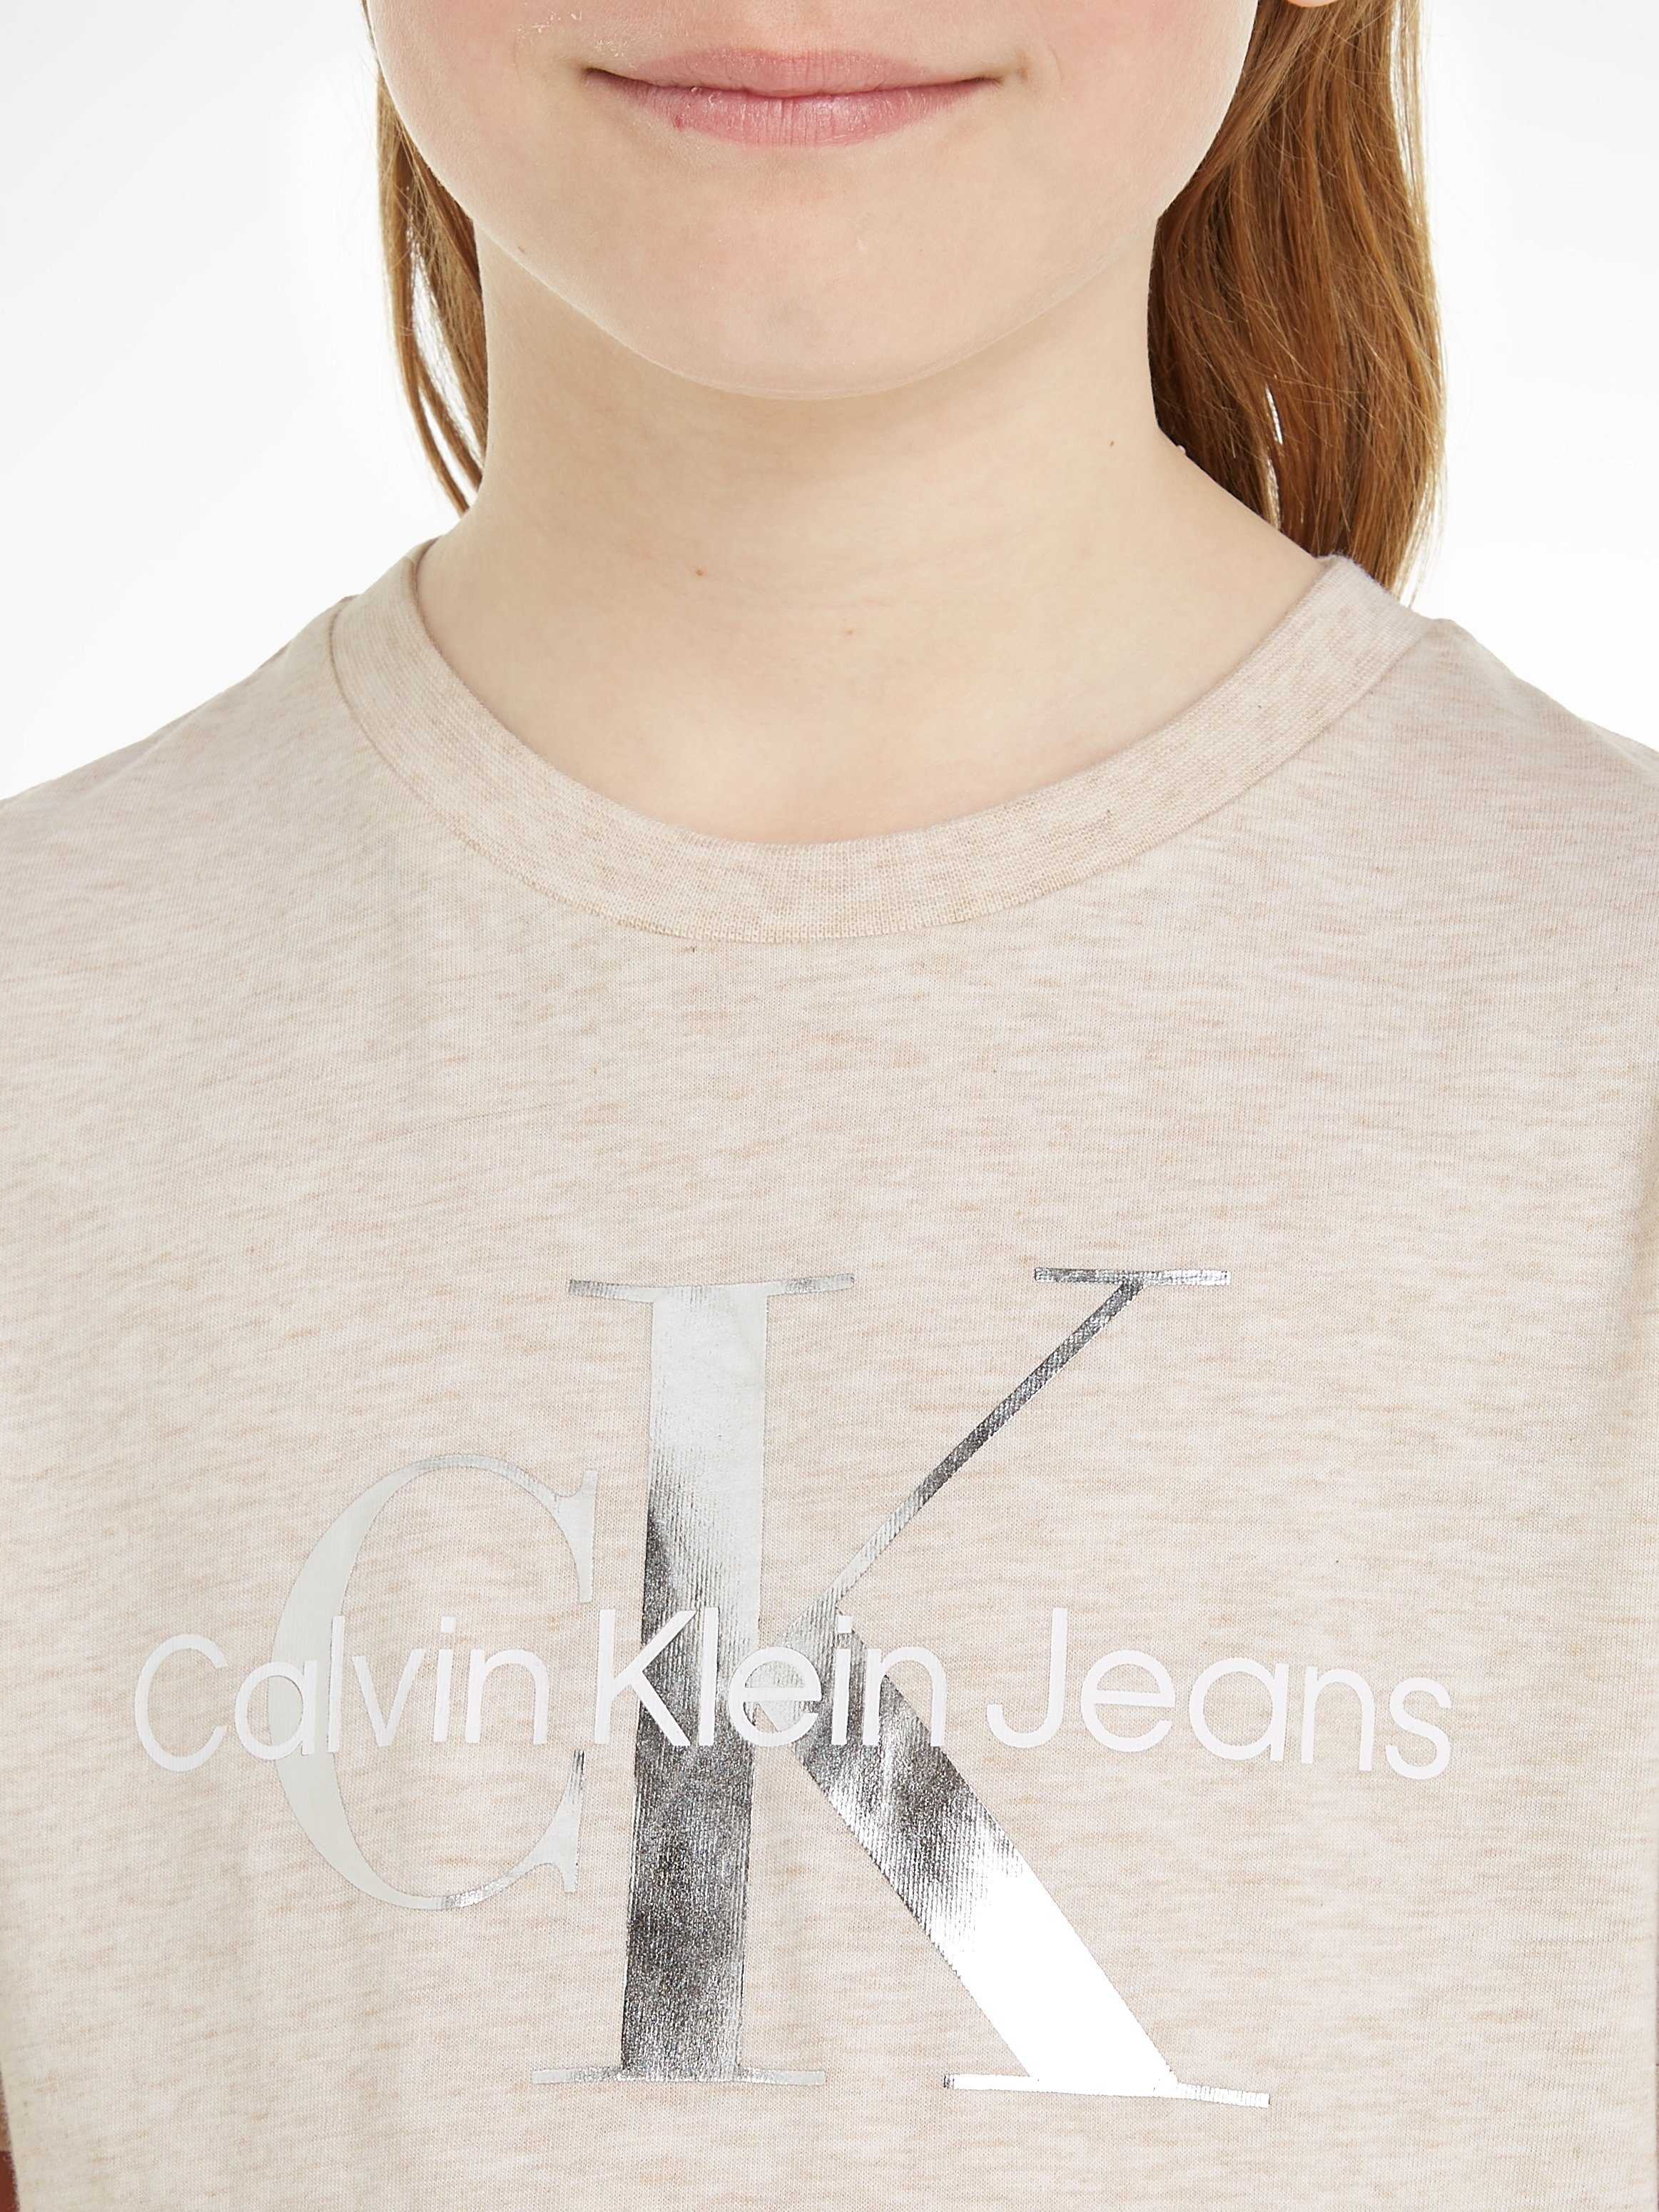 Calvin Klein SS Jeans Vanilla T-SHIRT T-Shirt CK Heather MONOGRAM